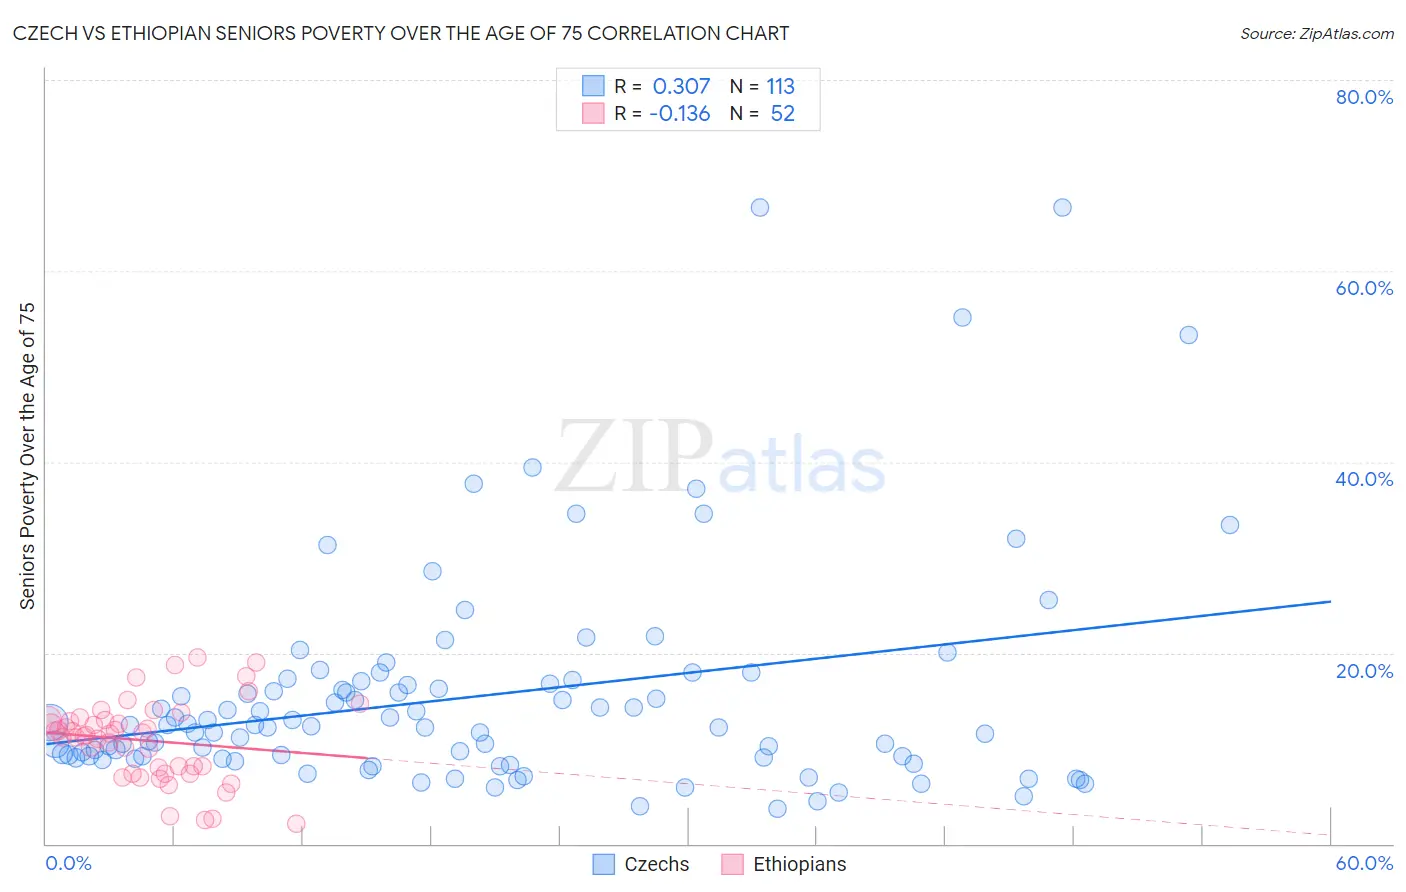 Czech vs Ethiopian Seniors Poverty Over the Age of 75